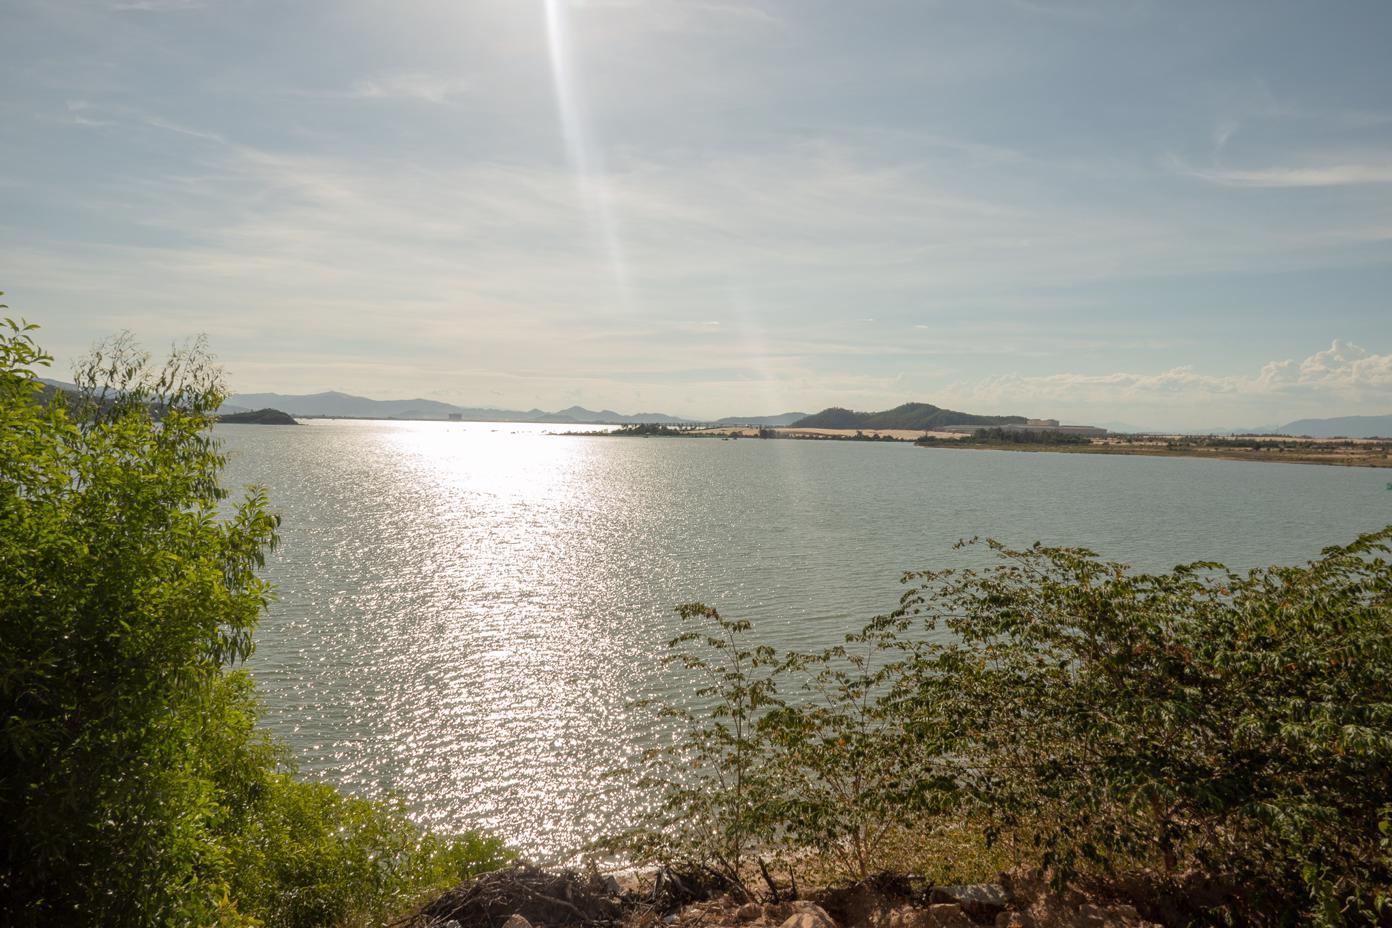 Phuong Mai Peninsula Quy Nhon View across the lake